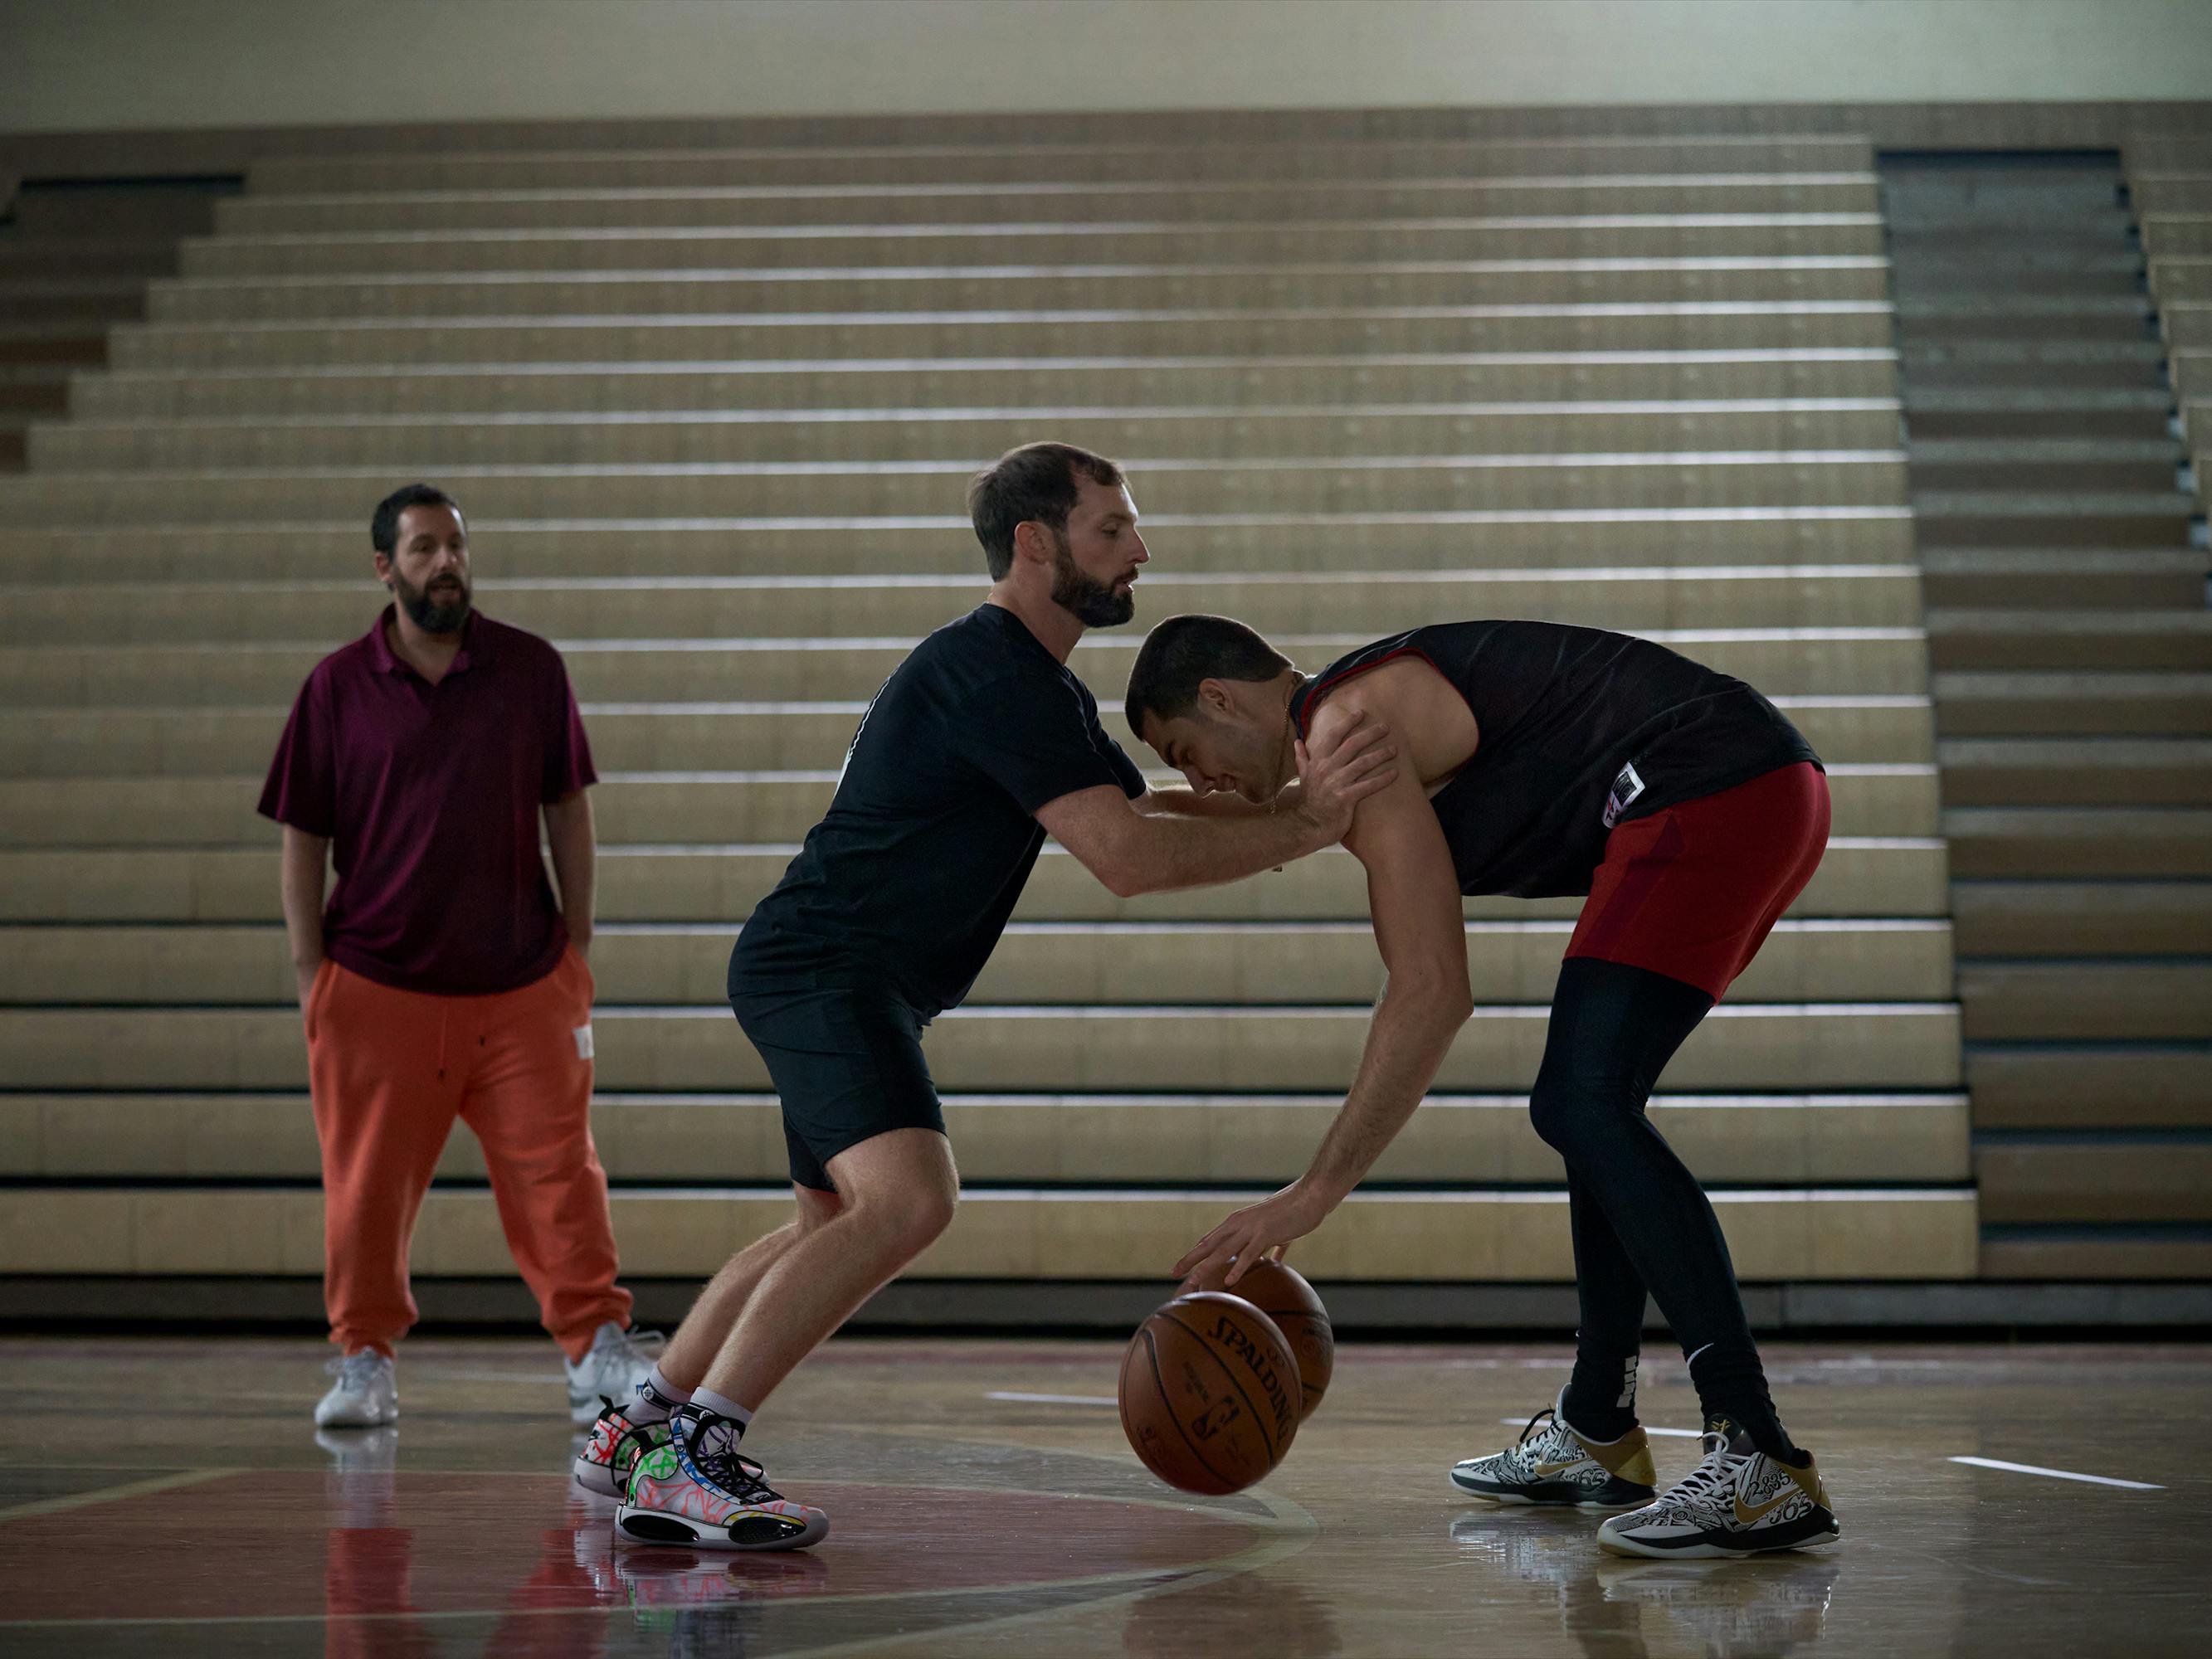 Stanley Sugerman (Adam Sandler) and Bo Cruz (Juancho Hernangómez) on the basketball court.